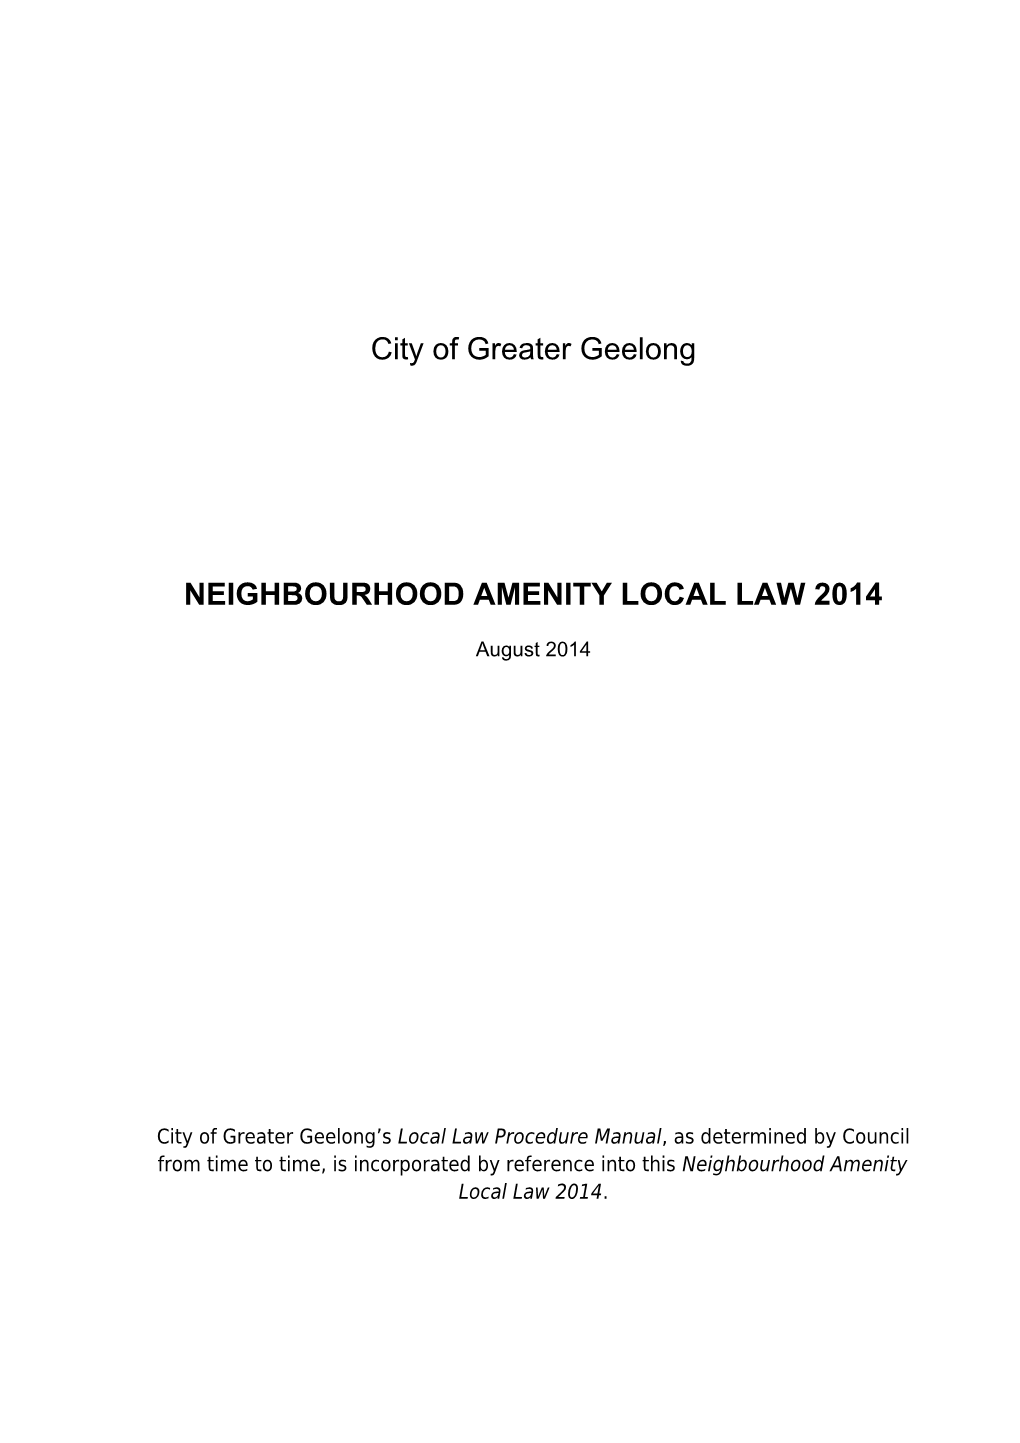 Neighbourhood Amenity Local Law 2014